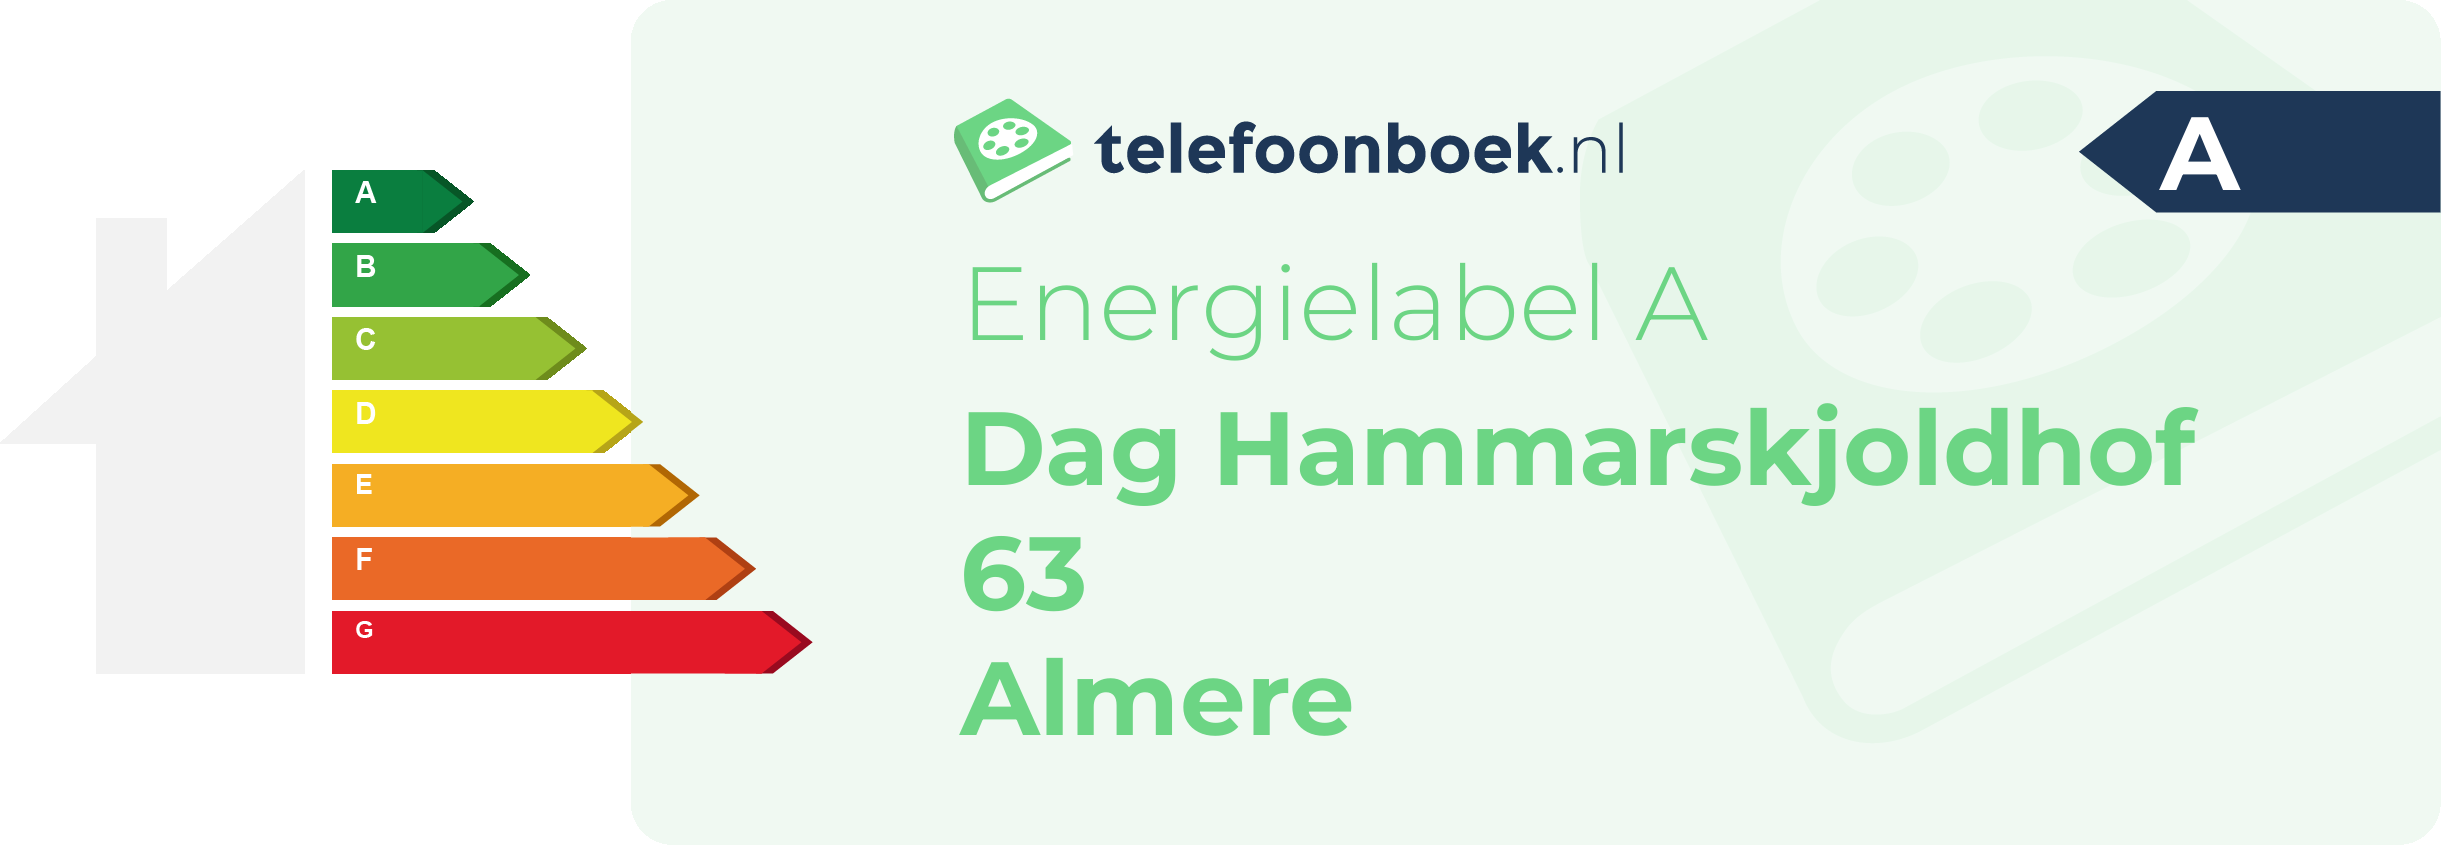 Energielabel Dag Hammarskjoldhof 63 Almere